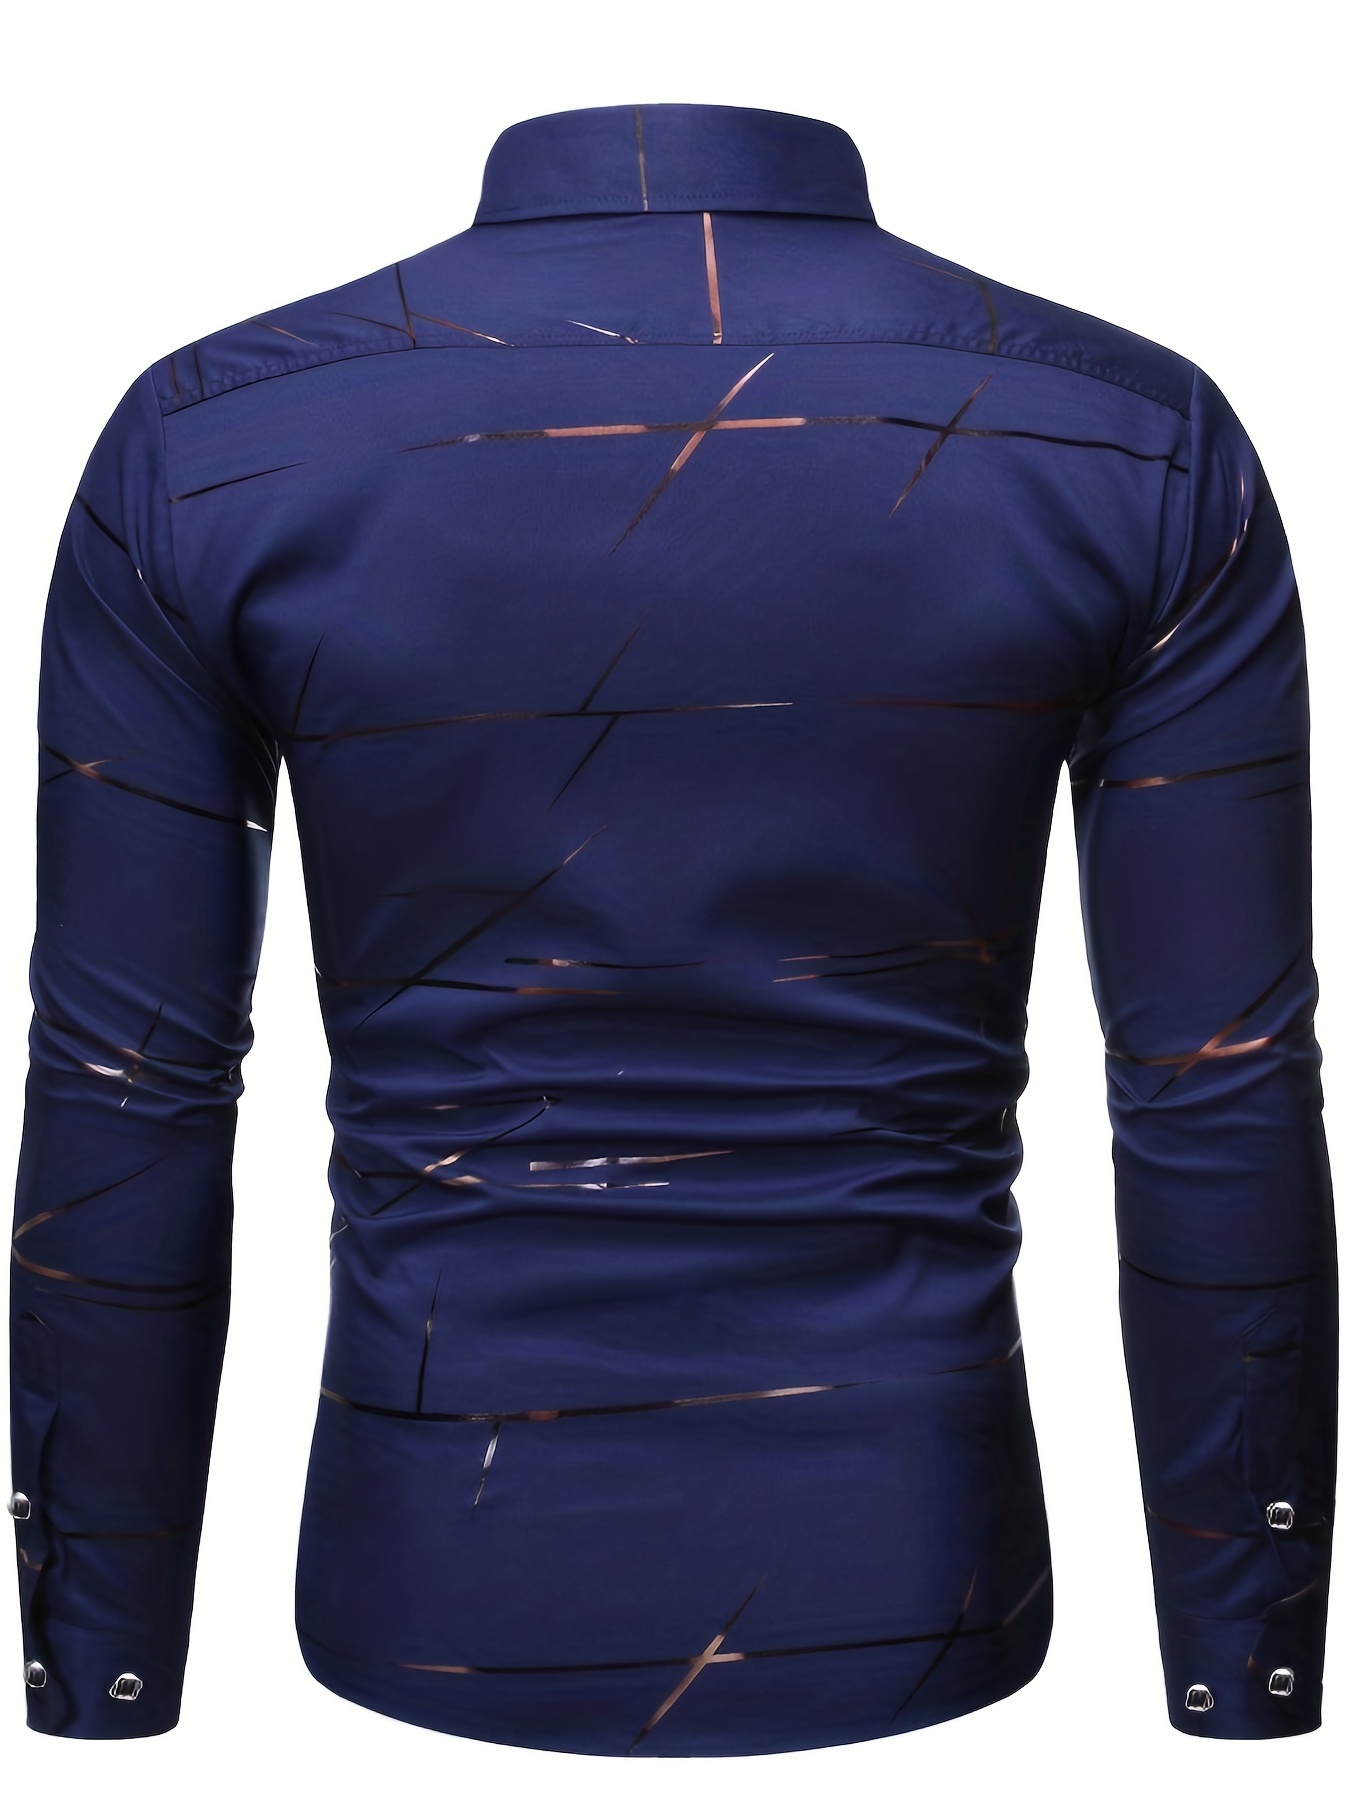 mens casual navy blue slim shirt details 6